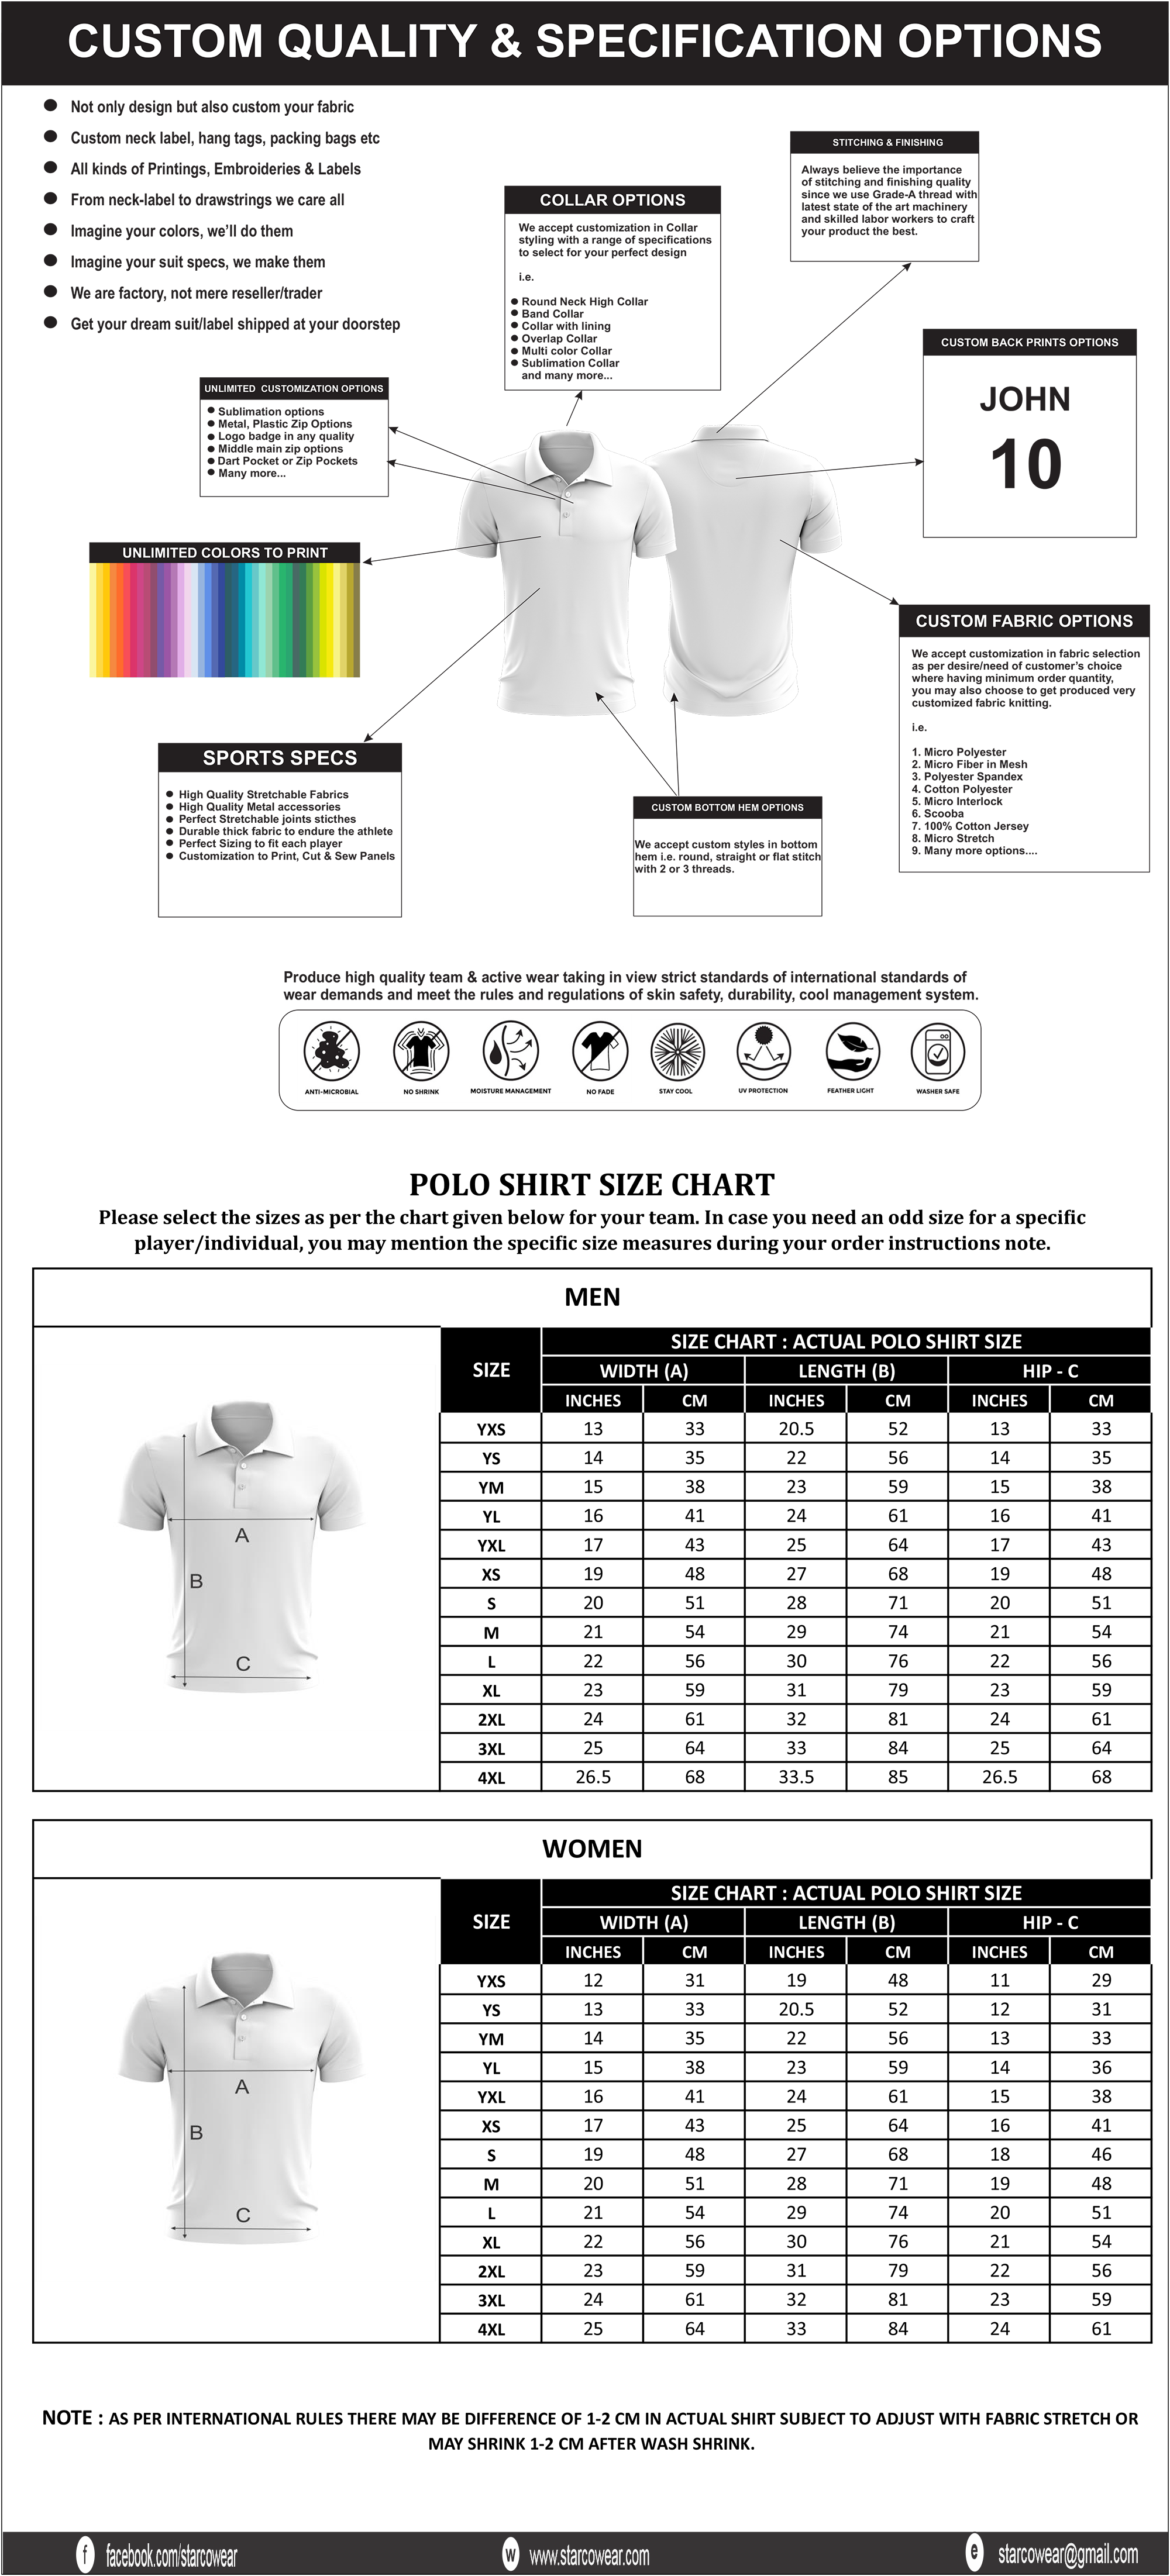 Polo Shirt Description and Size Chart